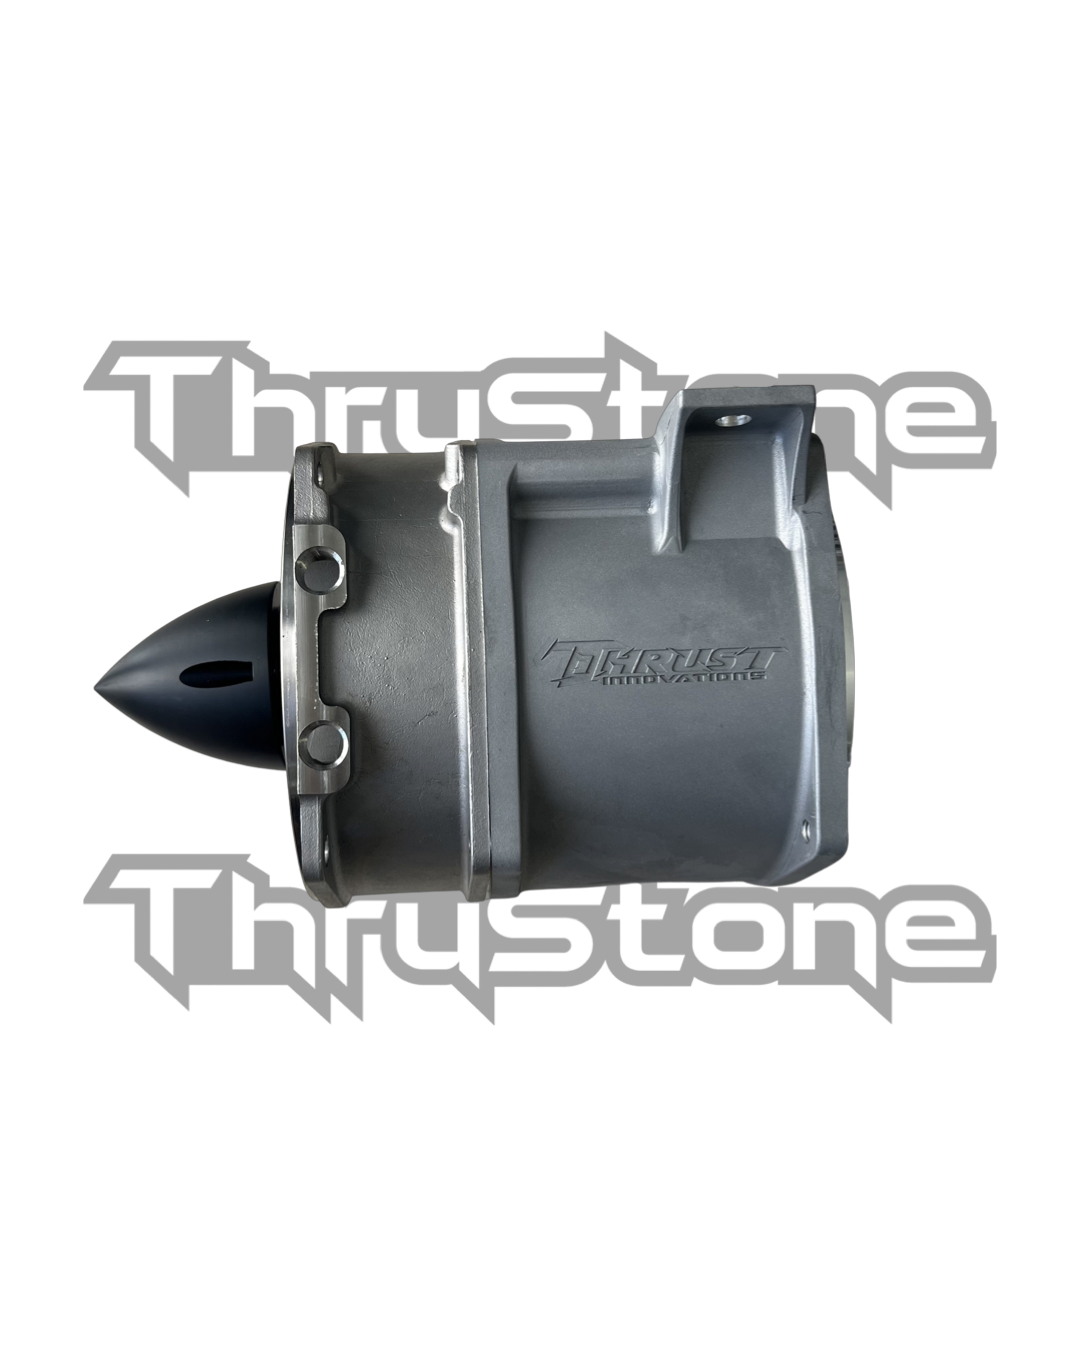 155mm 14 van pump setback Thrust innovations Products Model: ti 